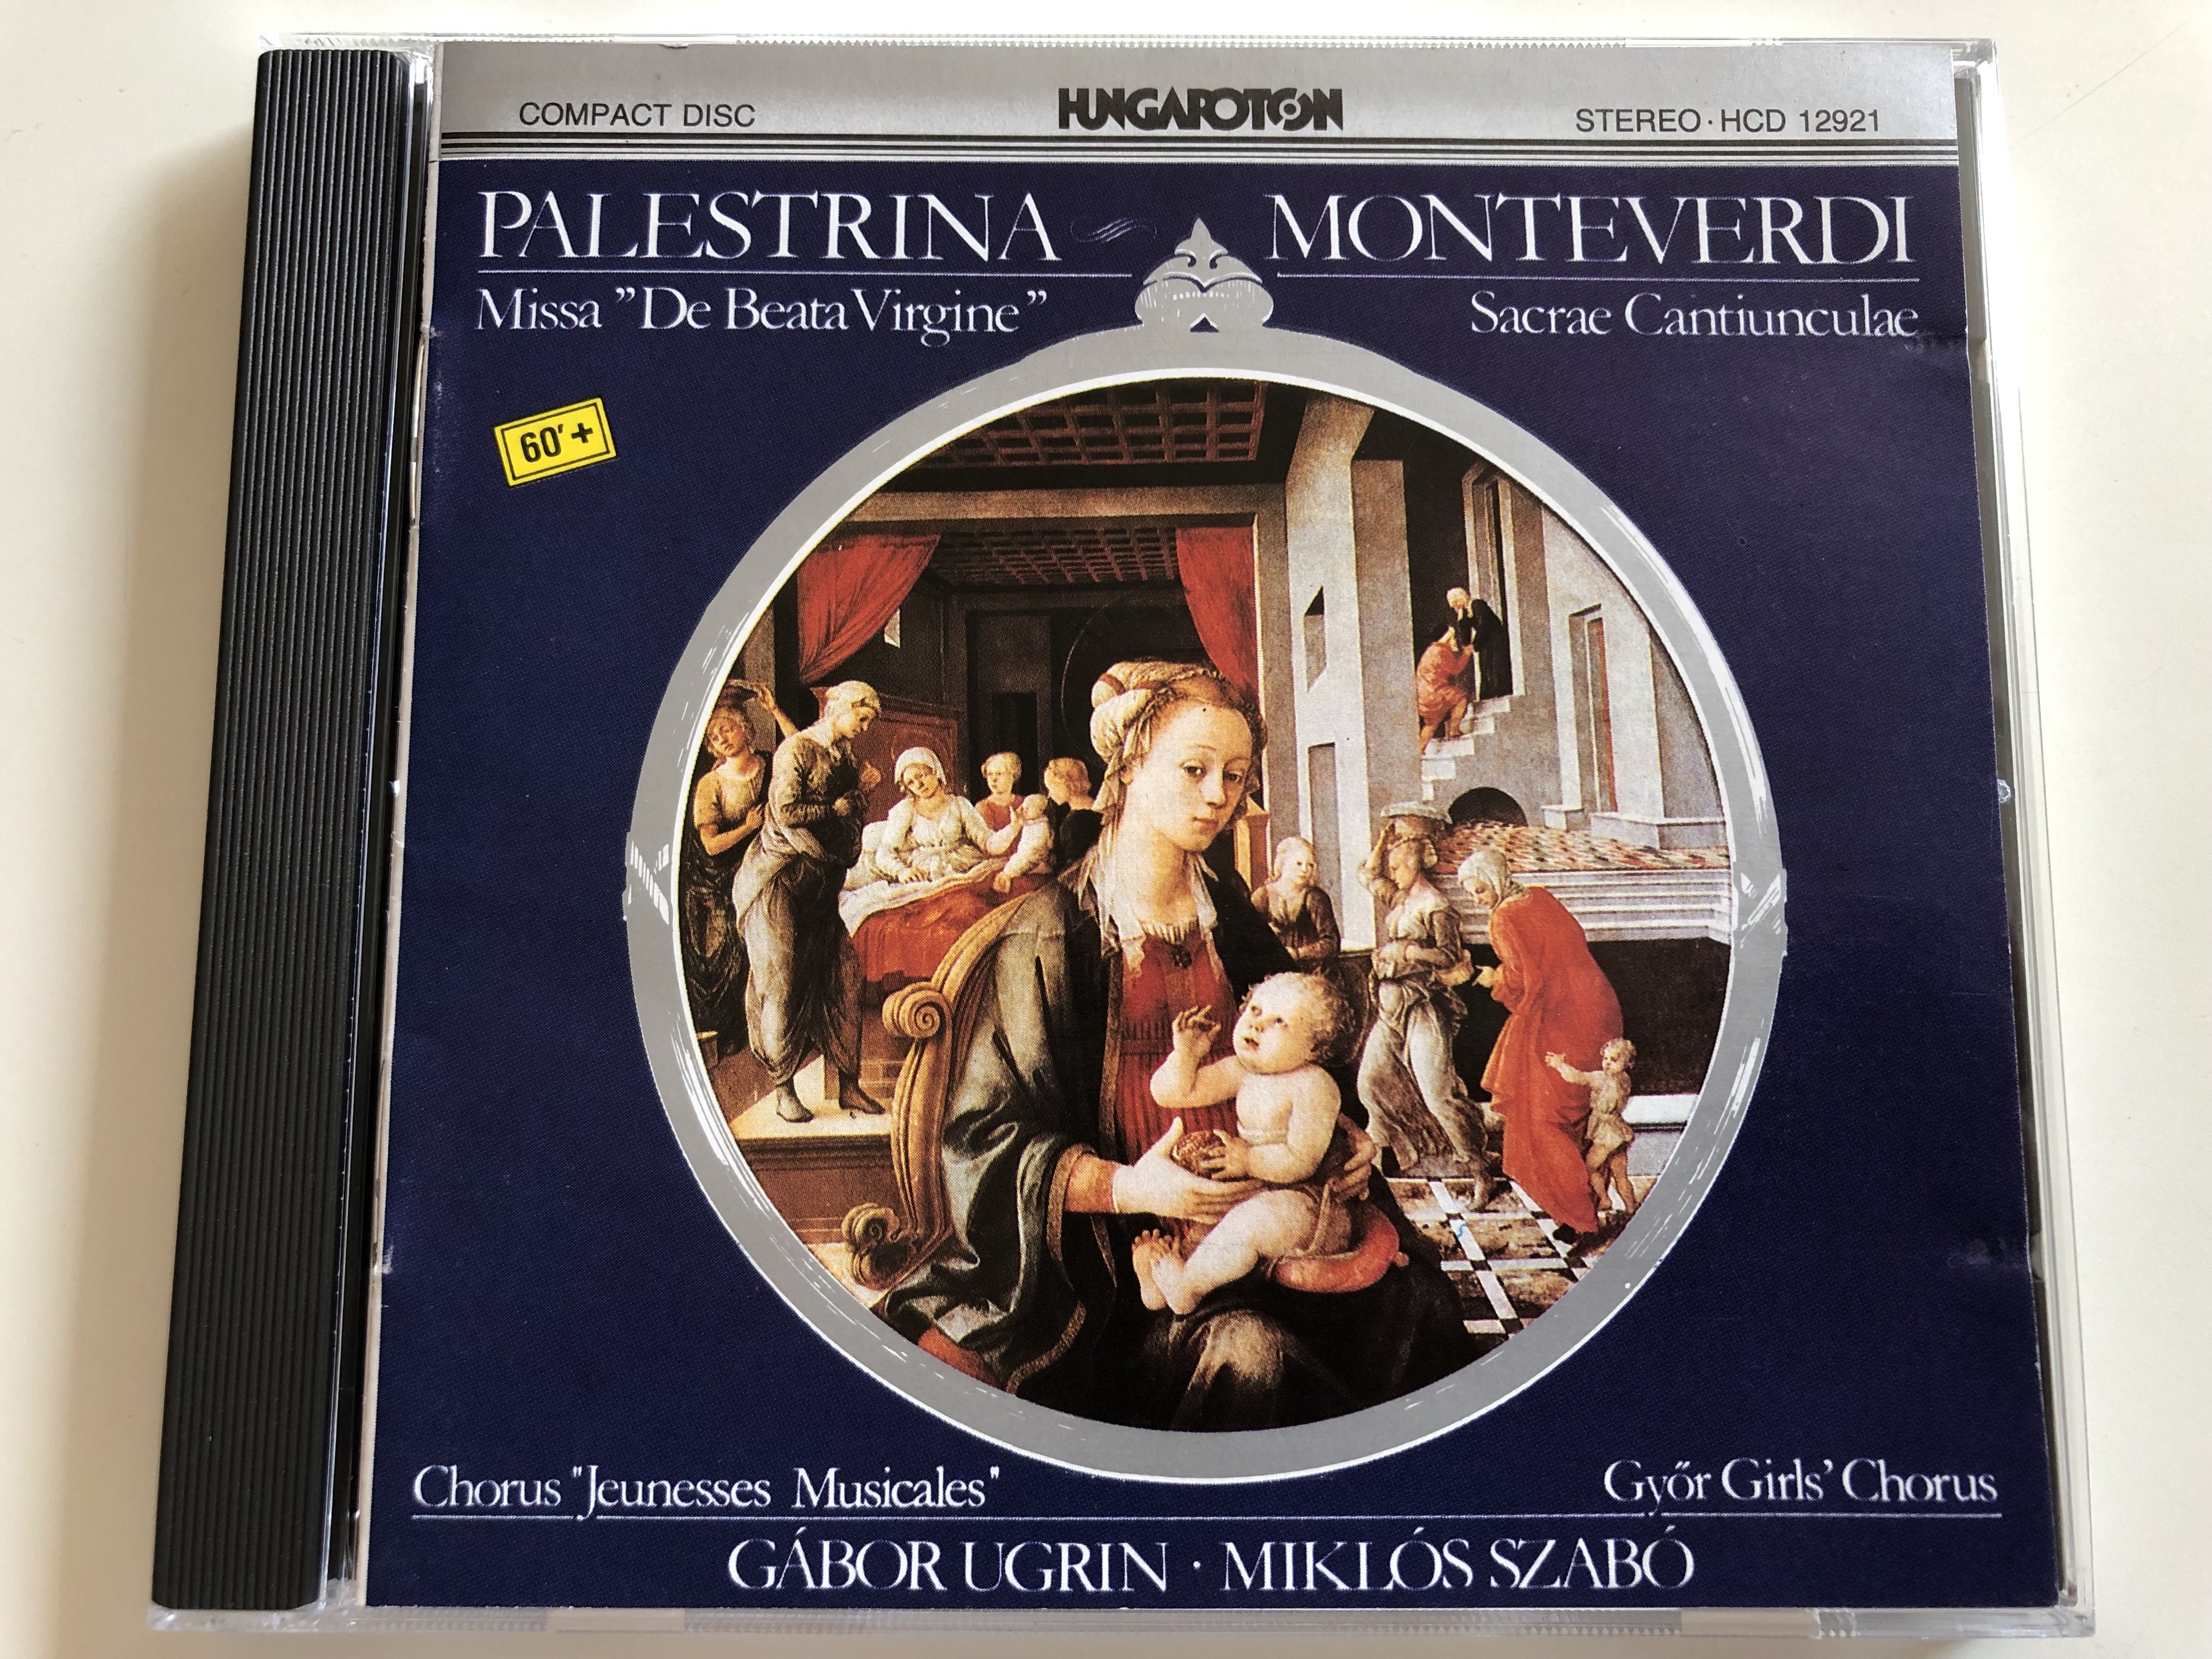 palestrina-missa-de-beata-virgine-monteverdi-sacrae-cantiunculae-chorus-jeunesses-musicales-gy-r-girls-chorus-g-bor-ugrin-mikl-s-szab-hungaroton-audio-cd-hcd-12921-1-.jpg